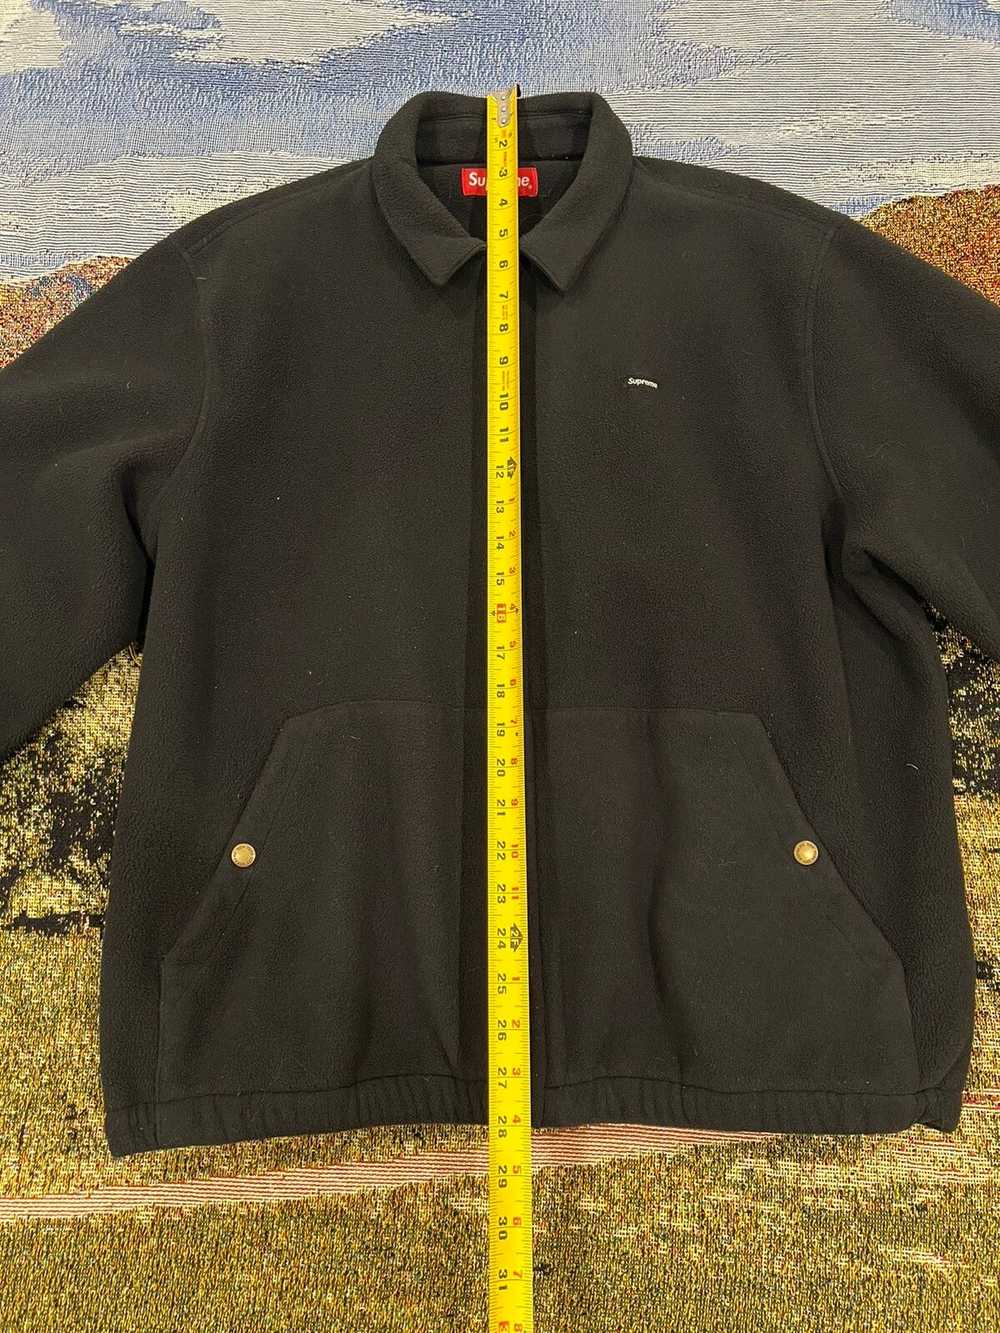 Supreme Supreme polartec fleece collar jacket - image 11